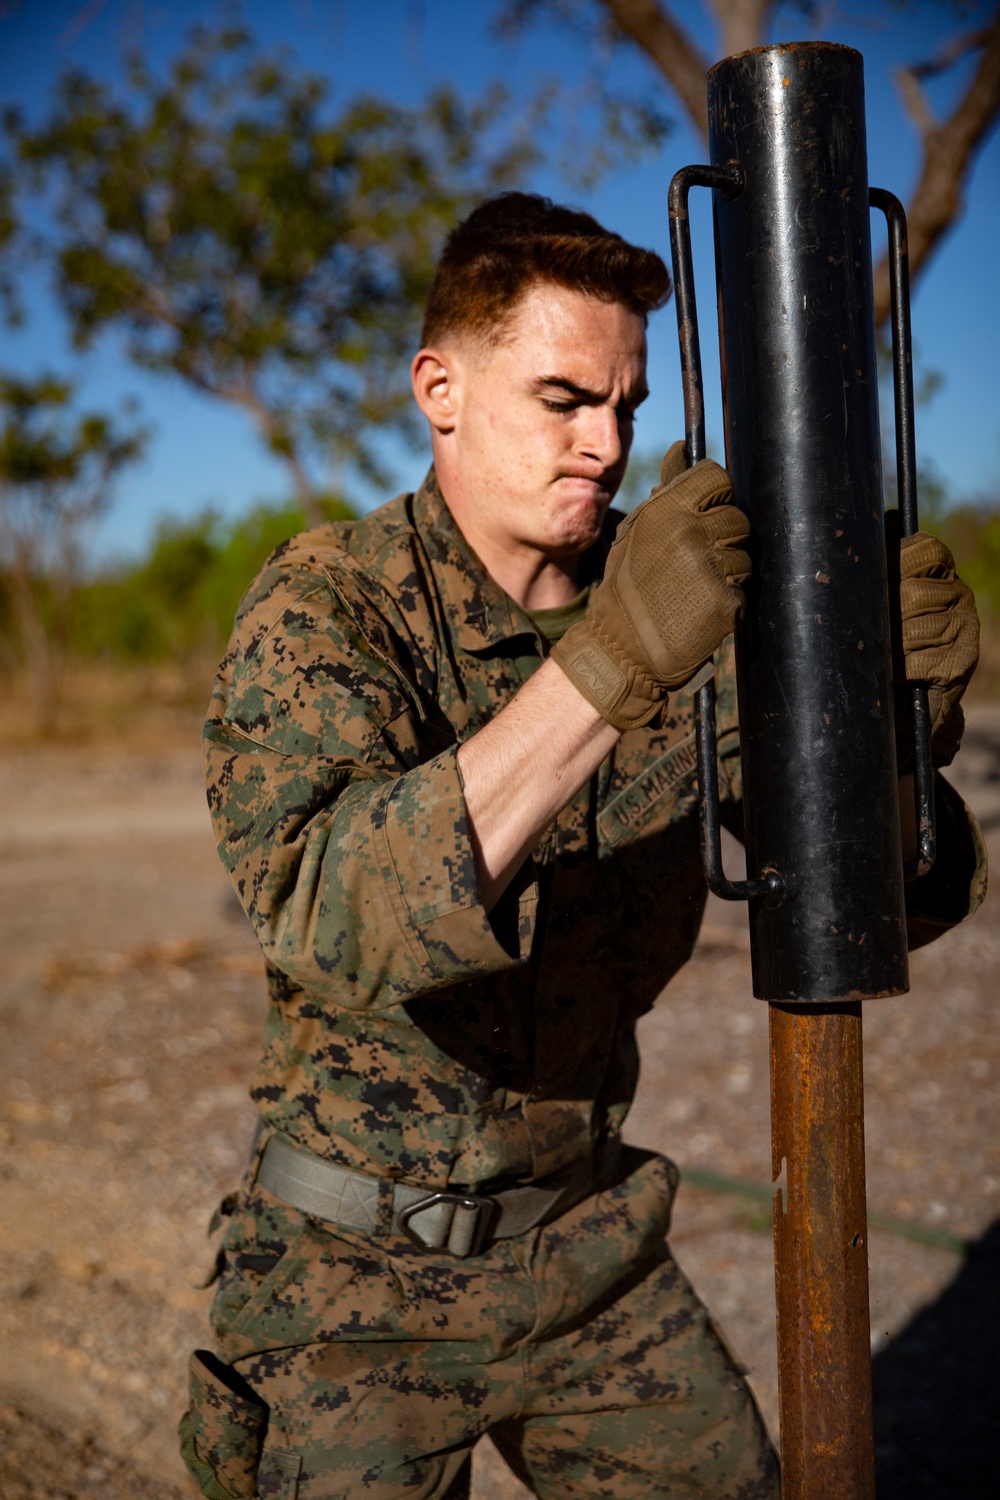 U.S. Marines conduct demolition range